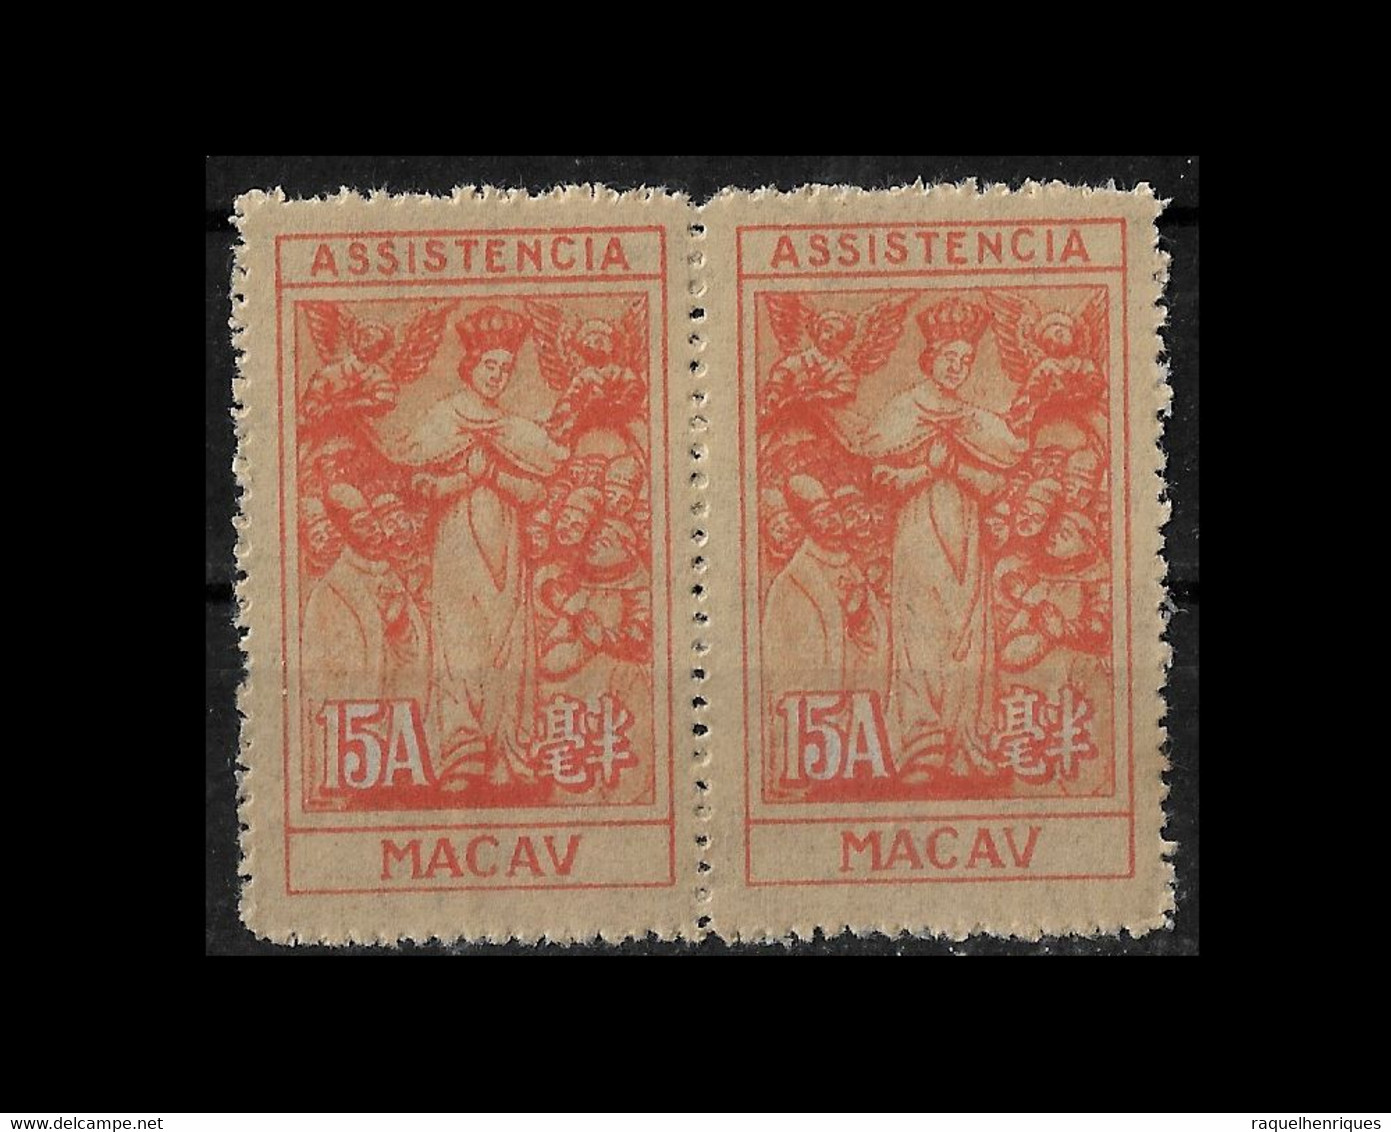 MACAU STAMP - 1945-47 Symbol Of Charity - Inscription "ASSISTENCIA" Perf:11 PAIR MNH (BA5#319) - Portomarken